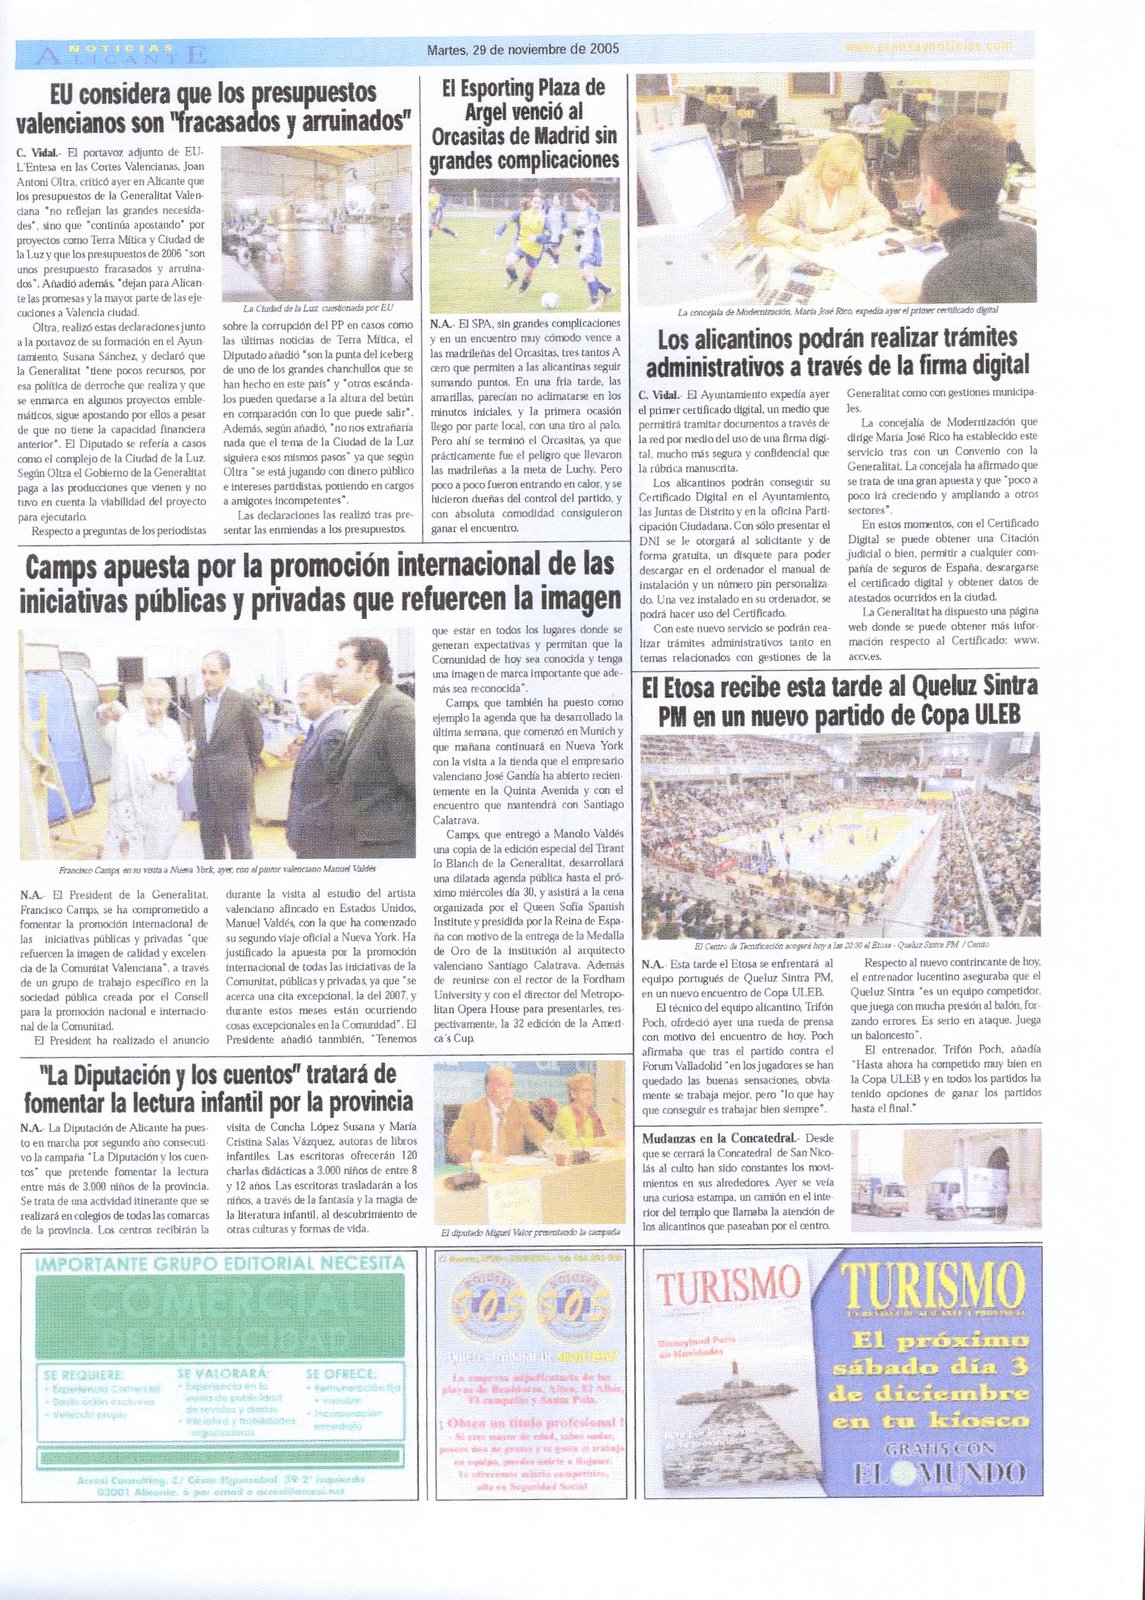 [Rueda+de+Prensa+en+la+DiputaciÃ³n+nov.2005.jpg]